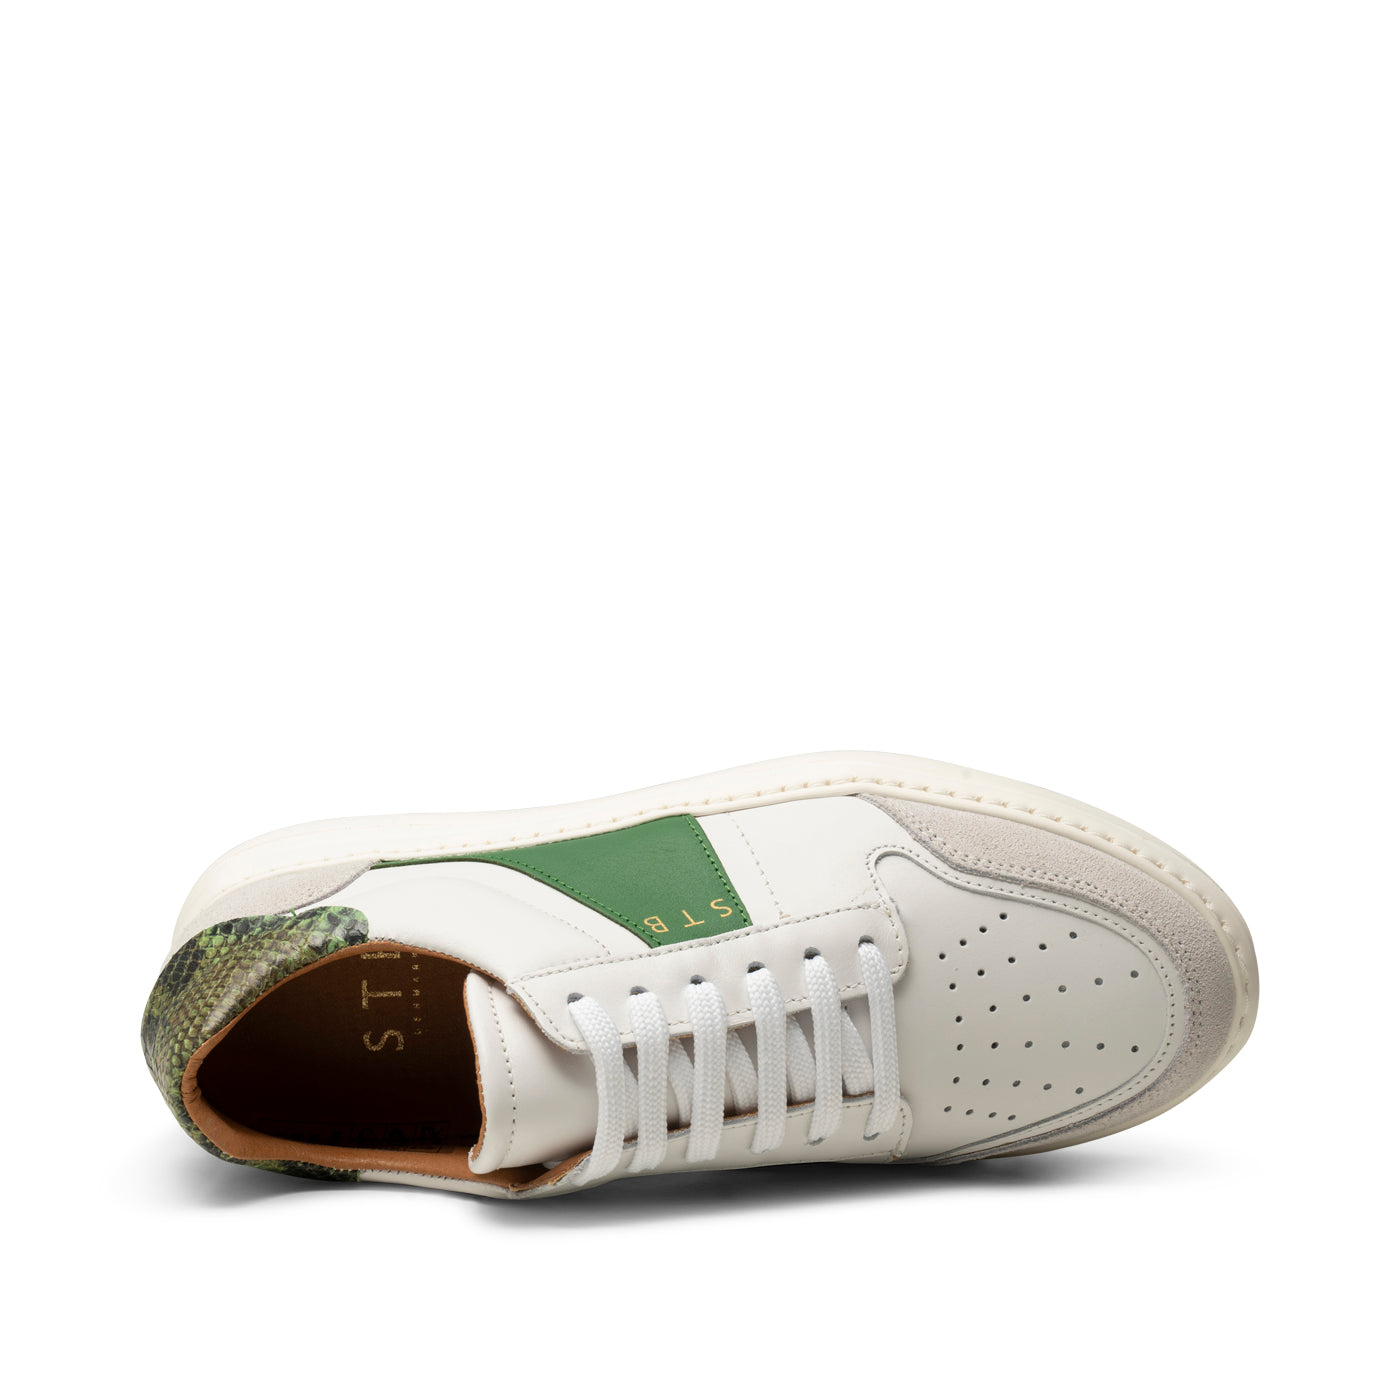 SHOE THE BEAR WOMENS Valda sneaker suede leather Sneakers 835 WHITE/GREEN MULTI